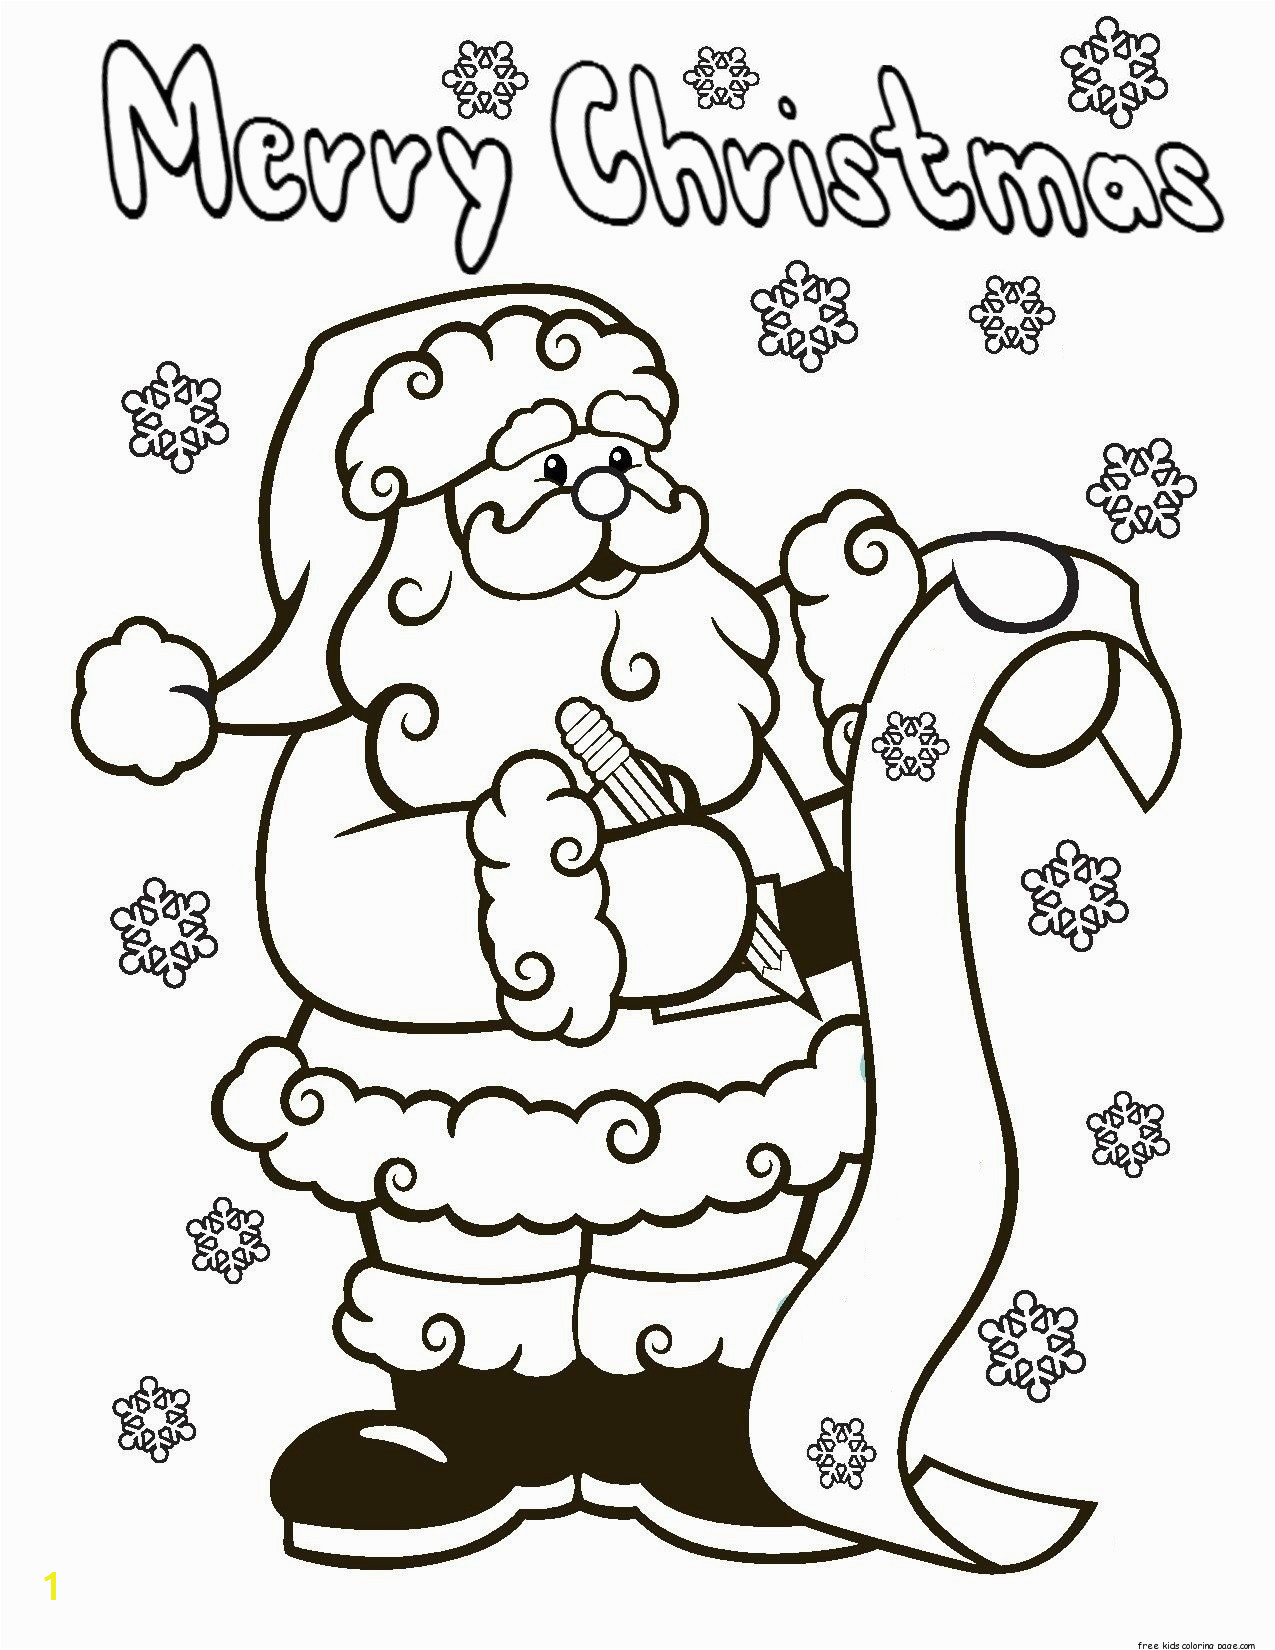 Santa Claus Coloring Pages Santa Claus Coloring Pages Santa Claus Coloring Pages Luxury Coloring Book